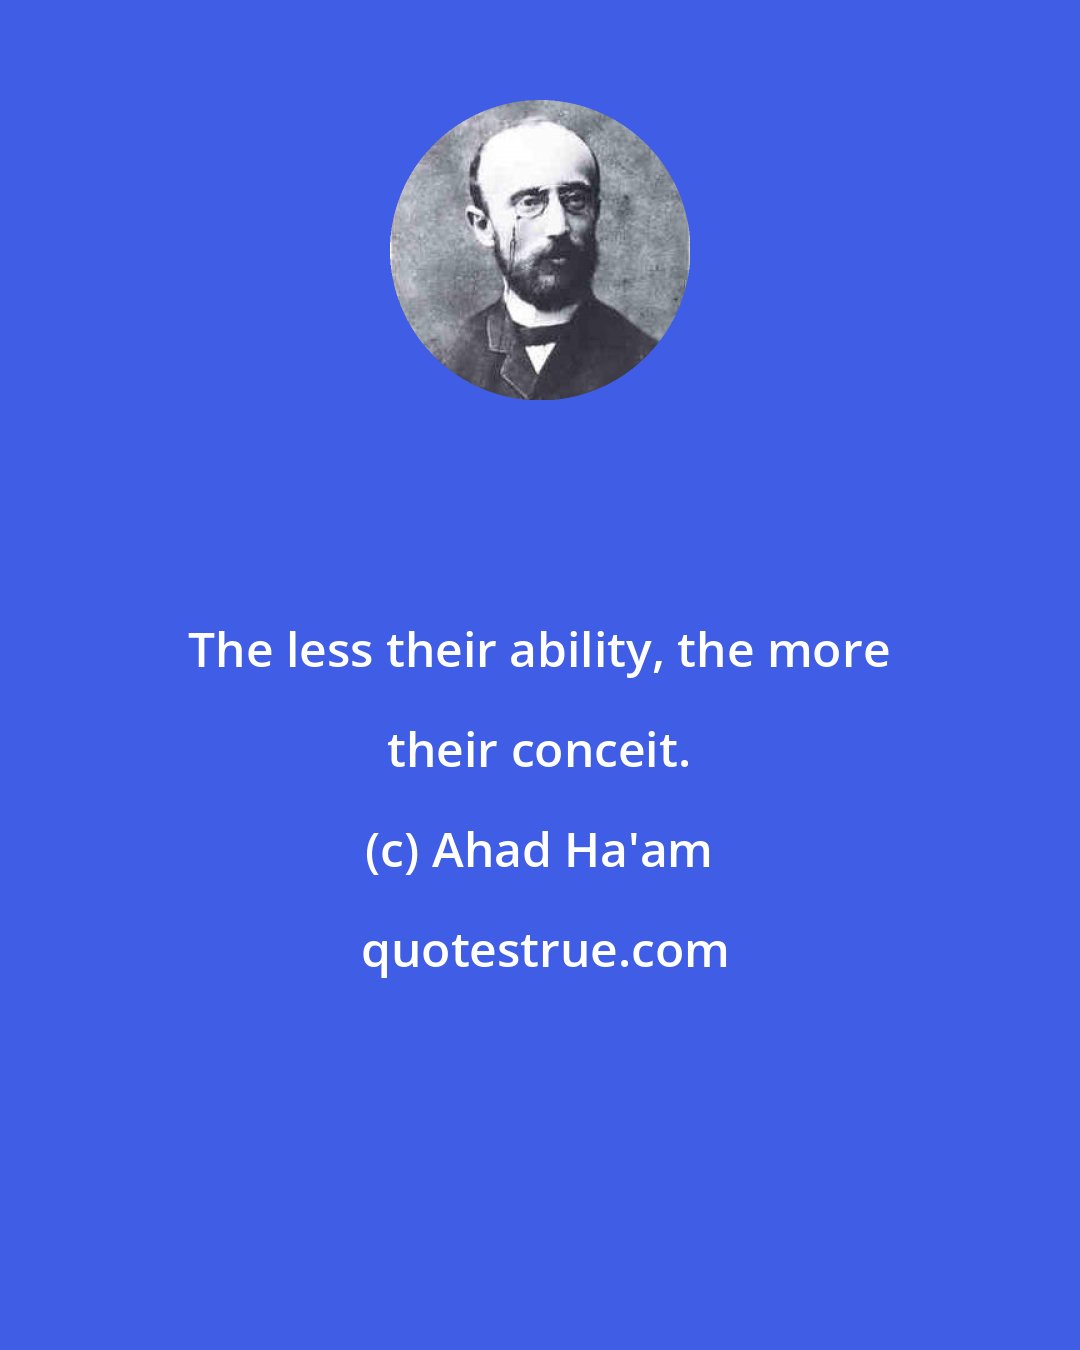 Ahad Ha'am: The less their ability, the more their conceit.